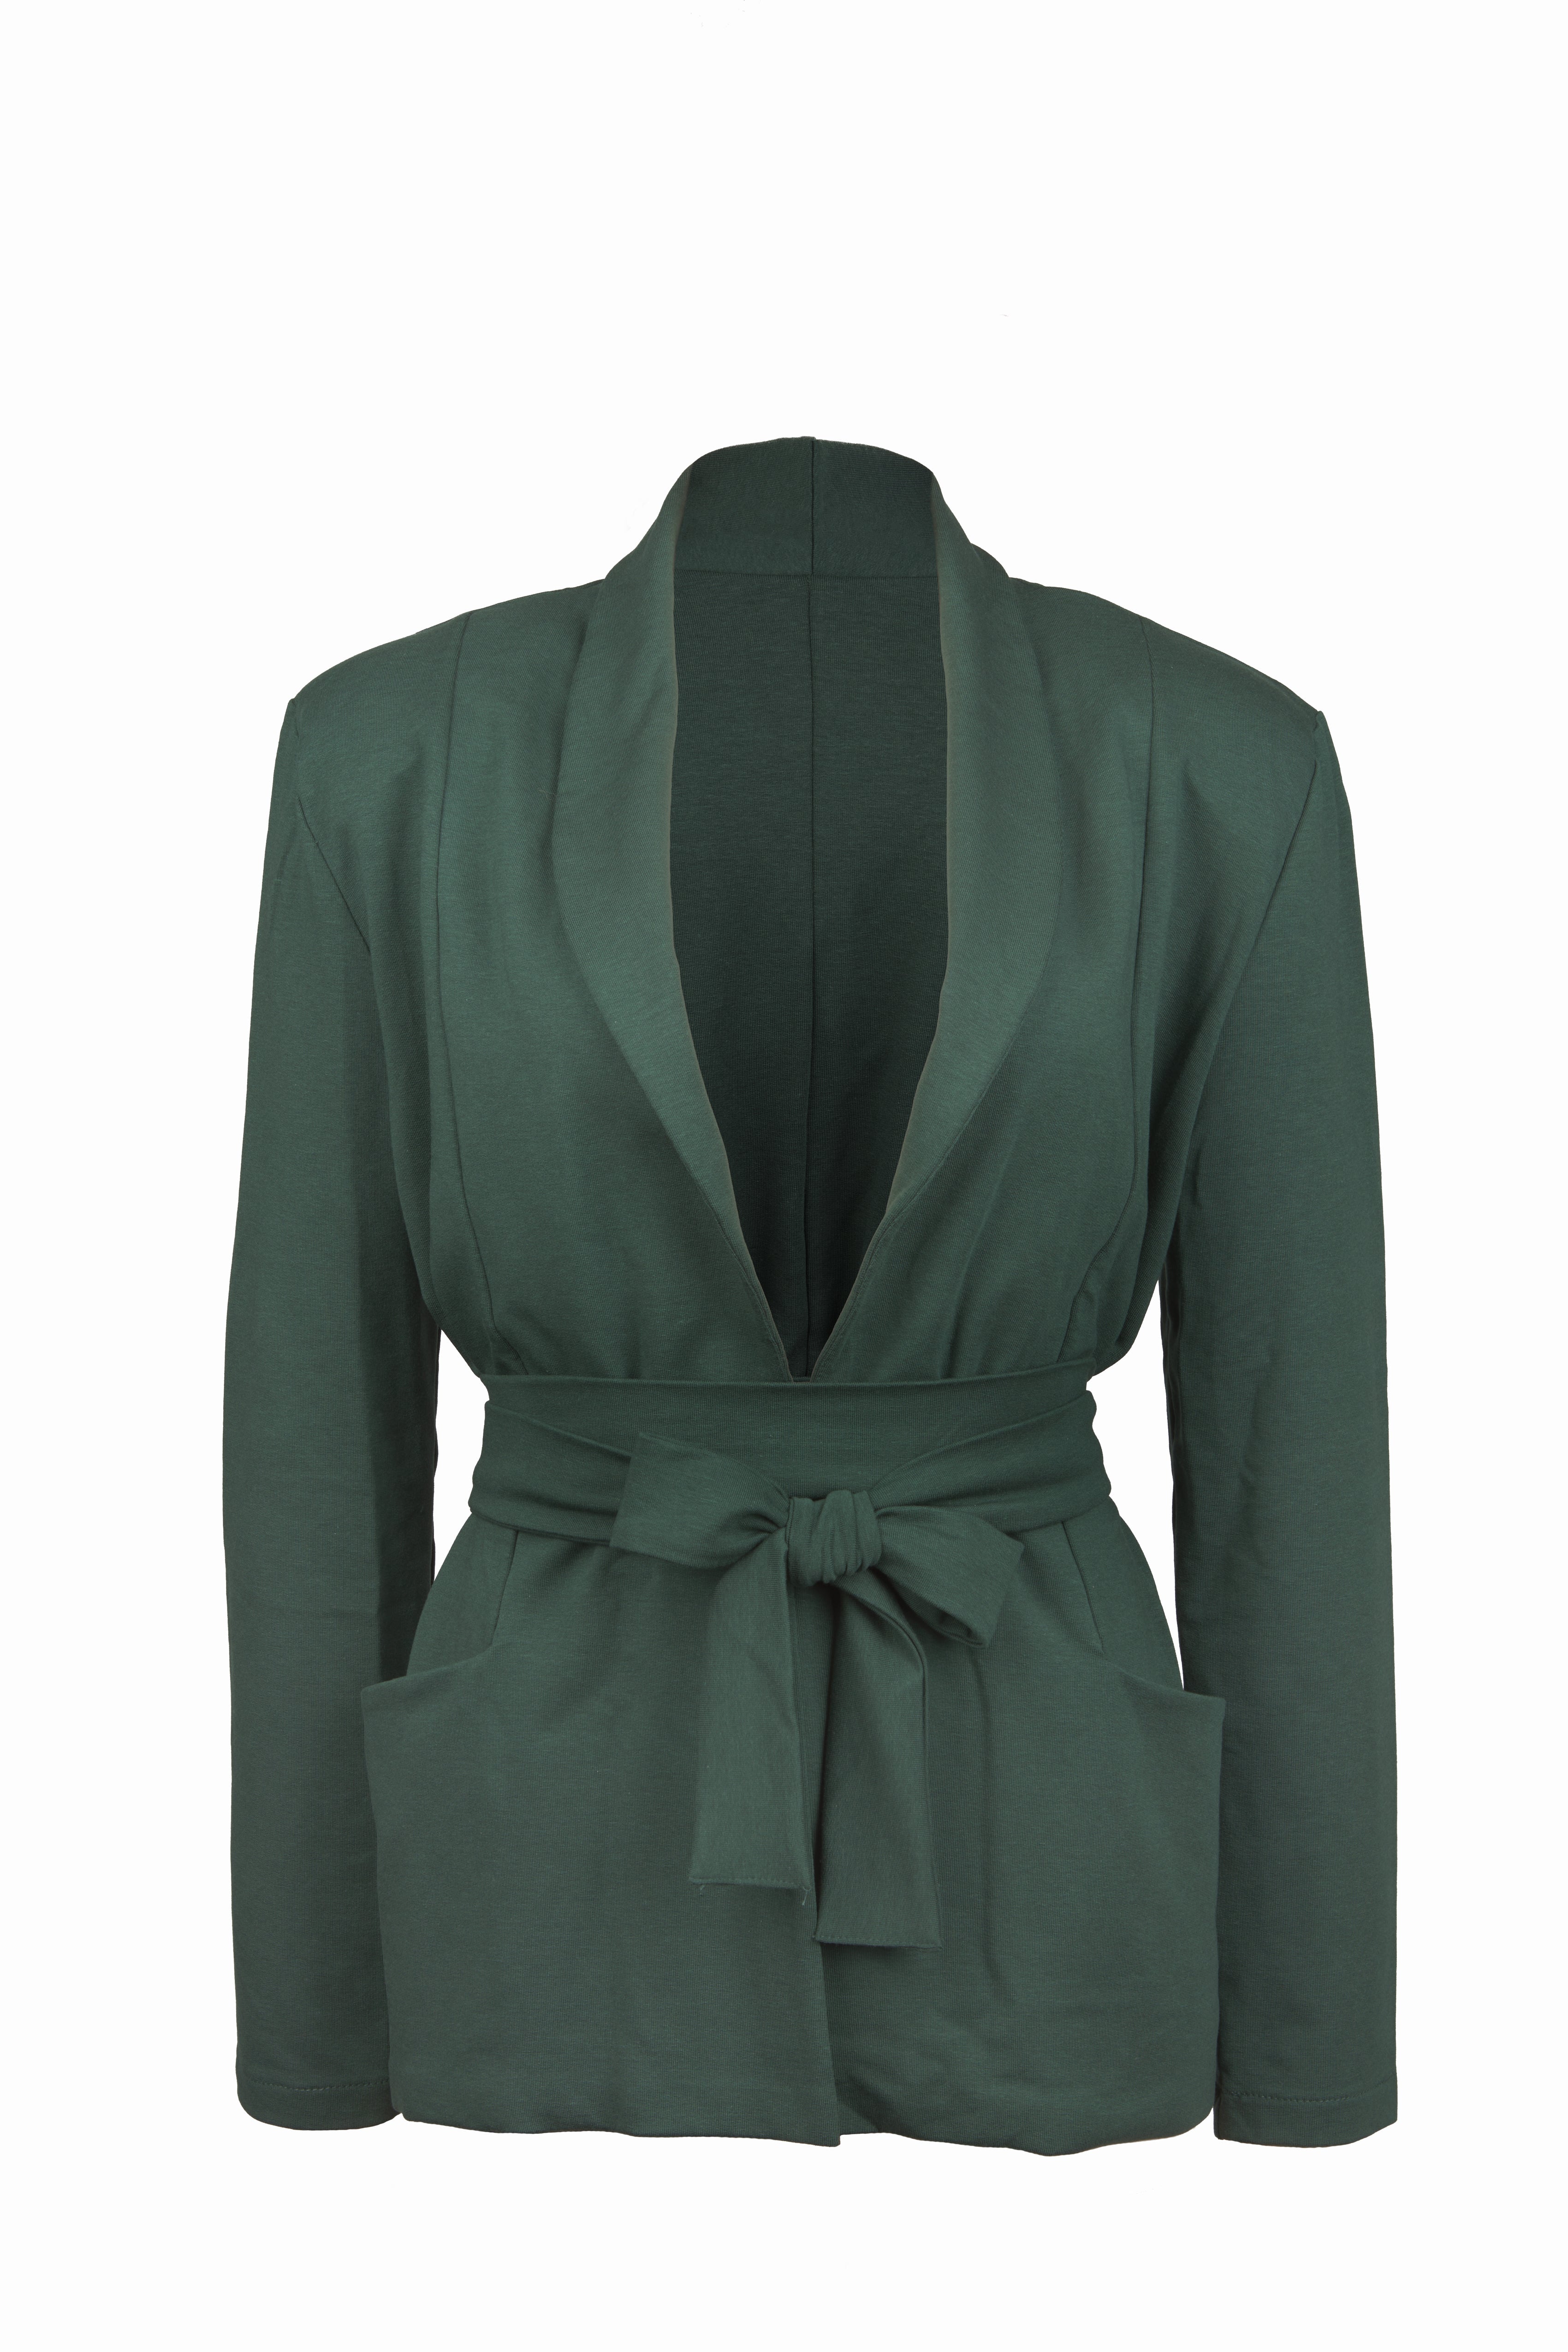 Green formal blazer made of lyocell by MOYA KALA 